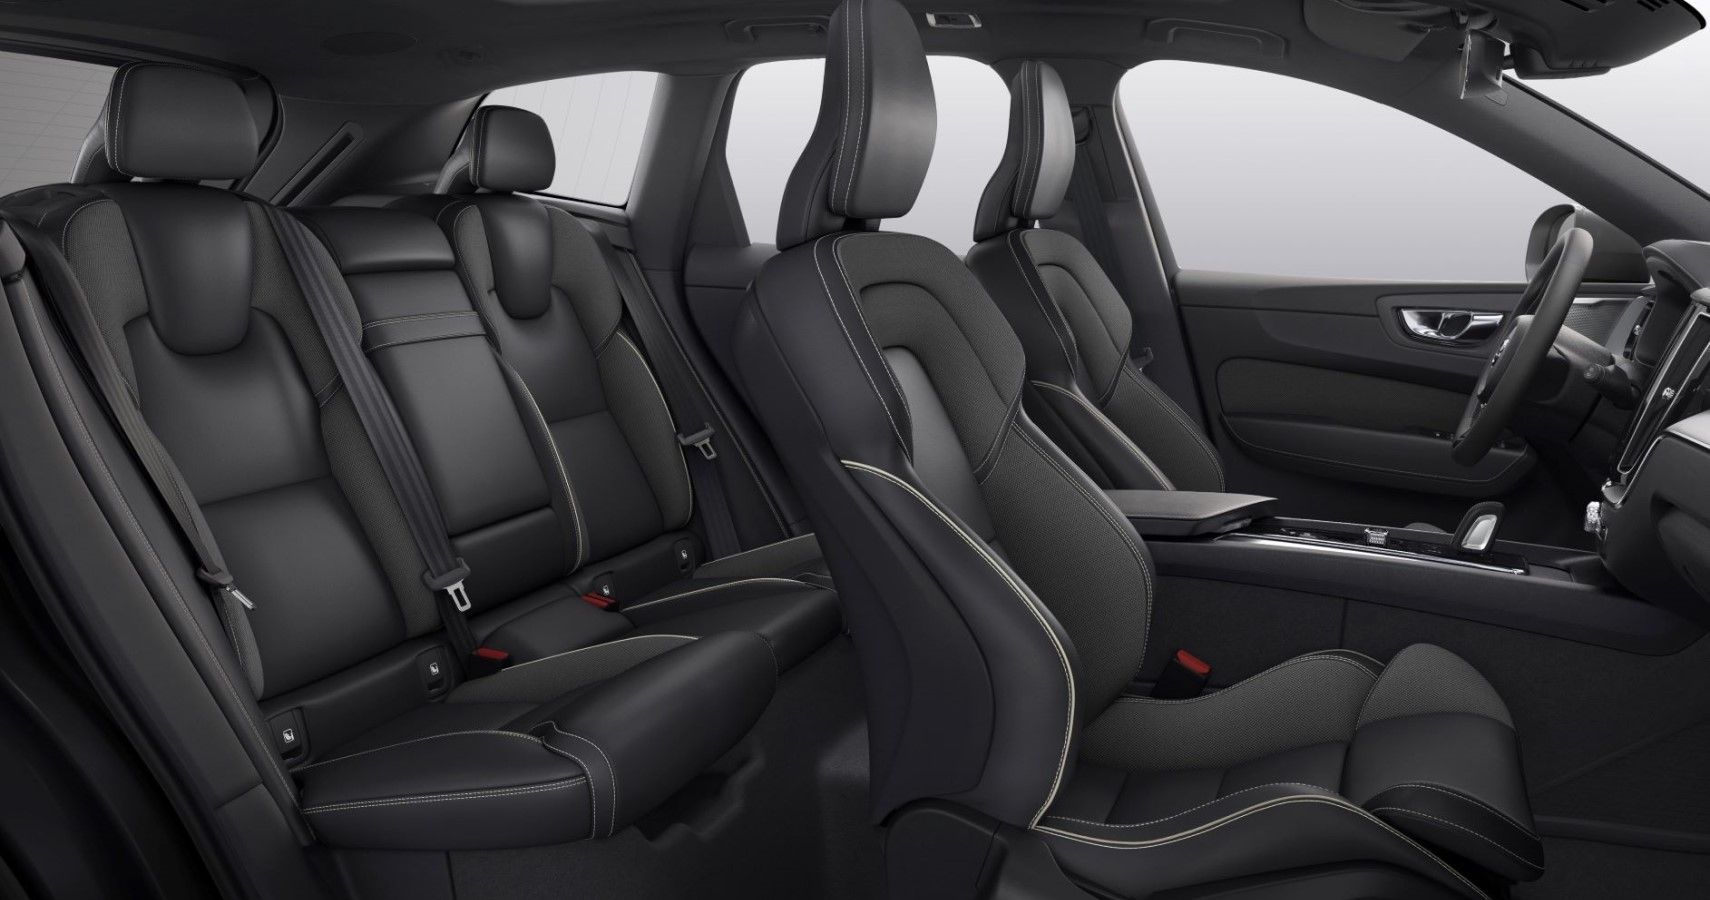 2022 Volvo XC60 seating layout